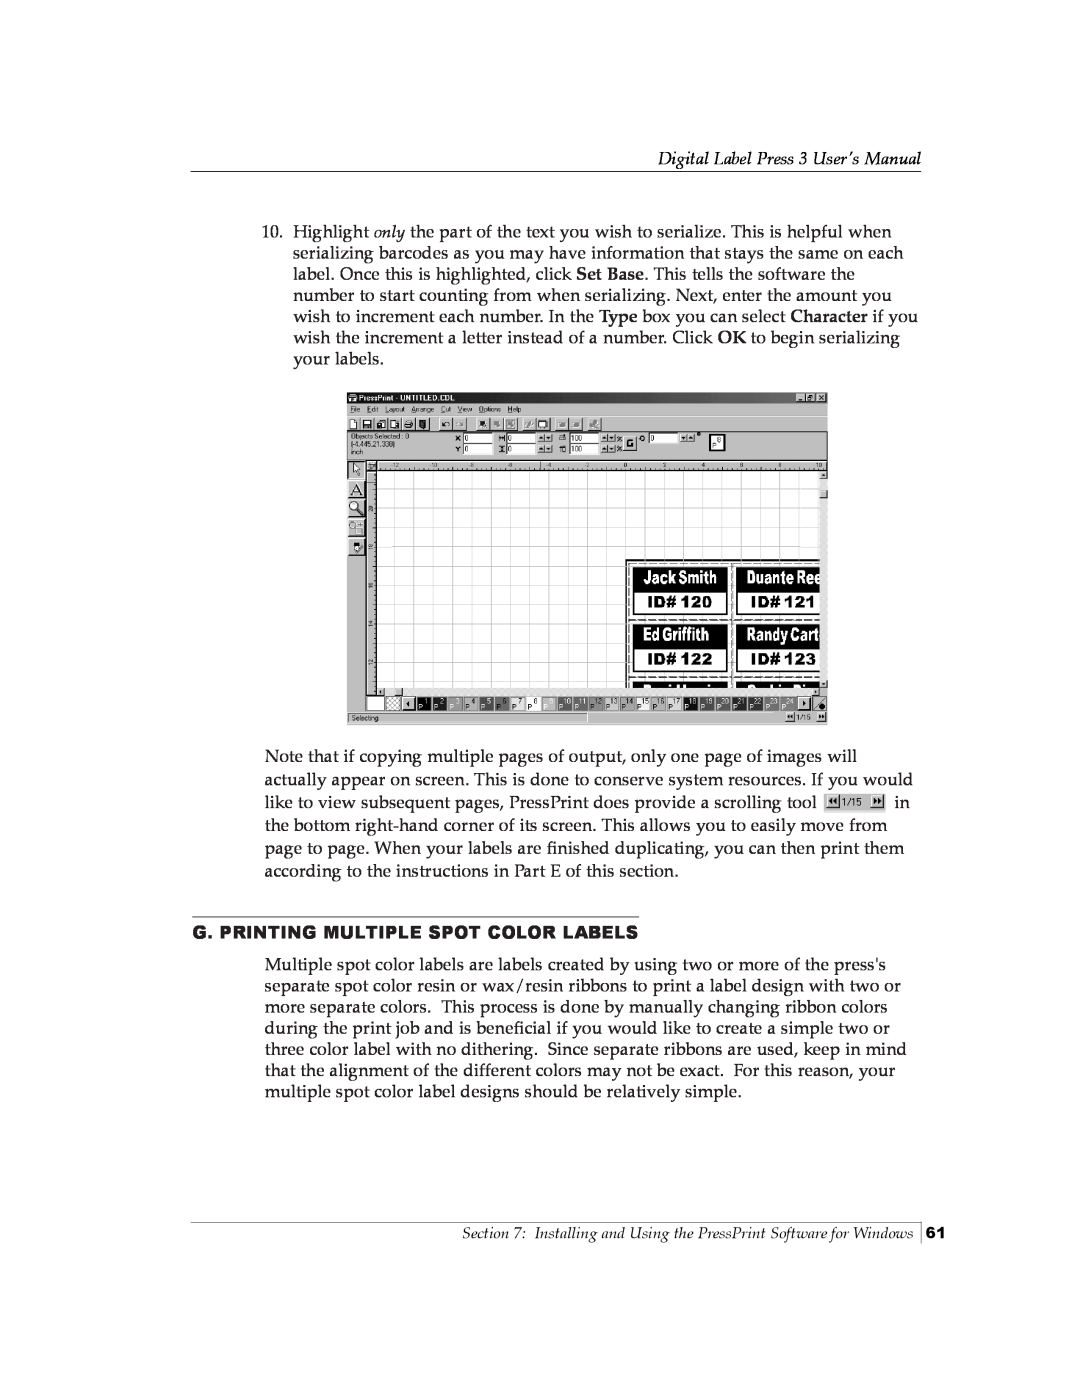 Primera Technology 510212 manual G. Printing Multiple Spot Color Labels, Digital Label Press 3 User’s Manual 